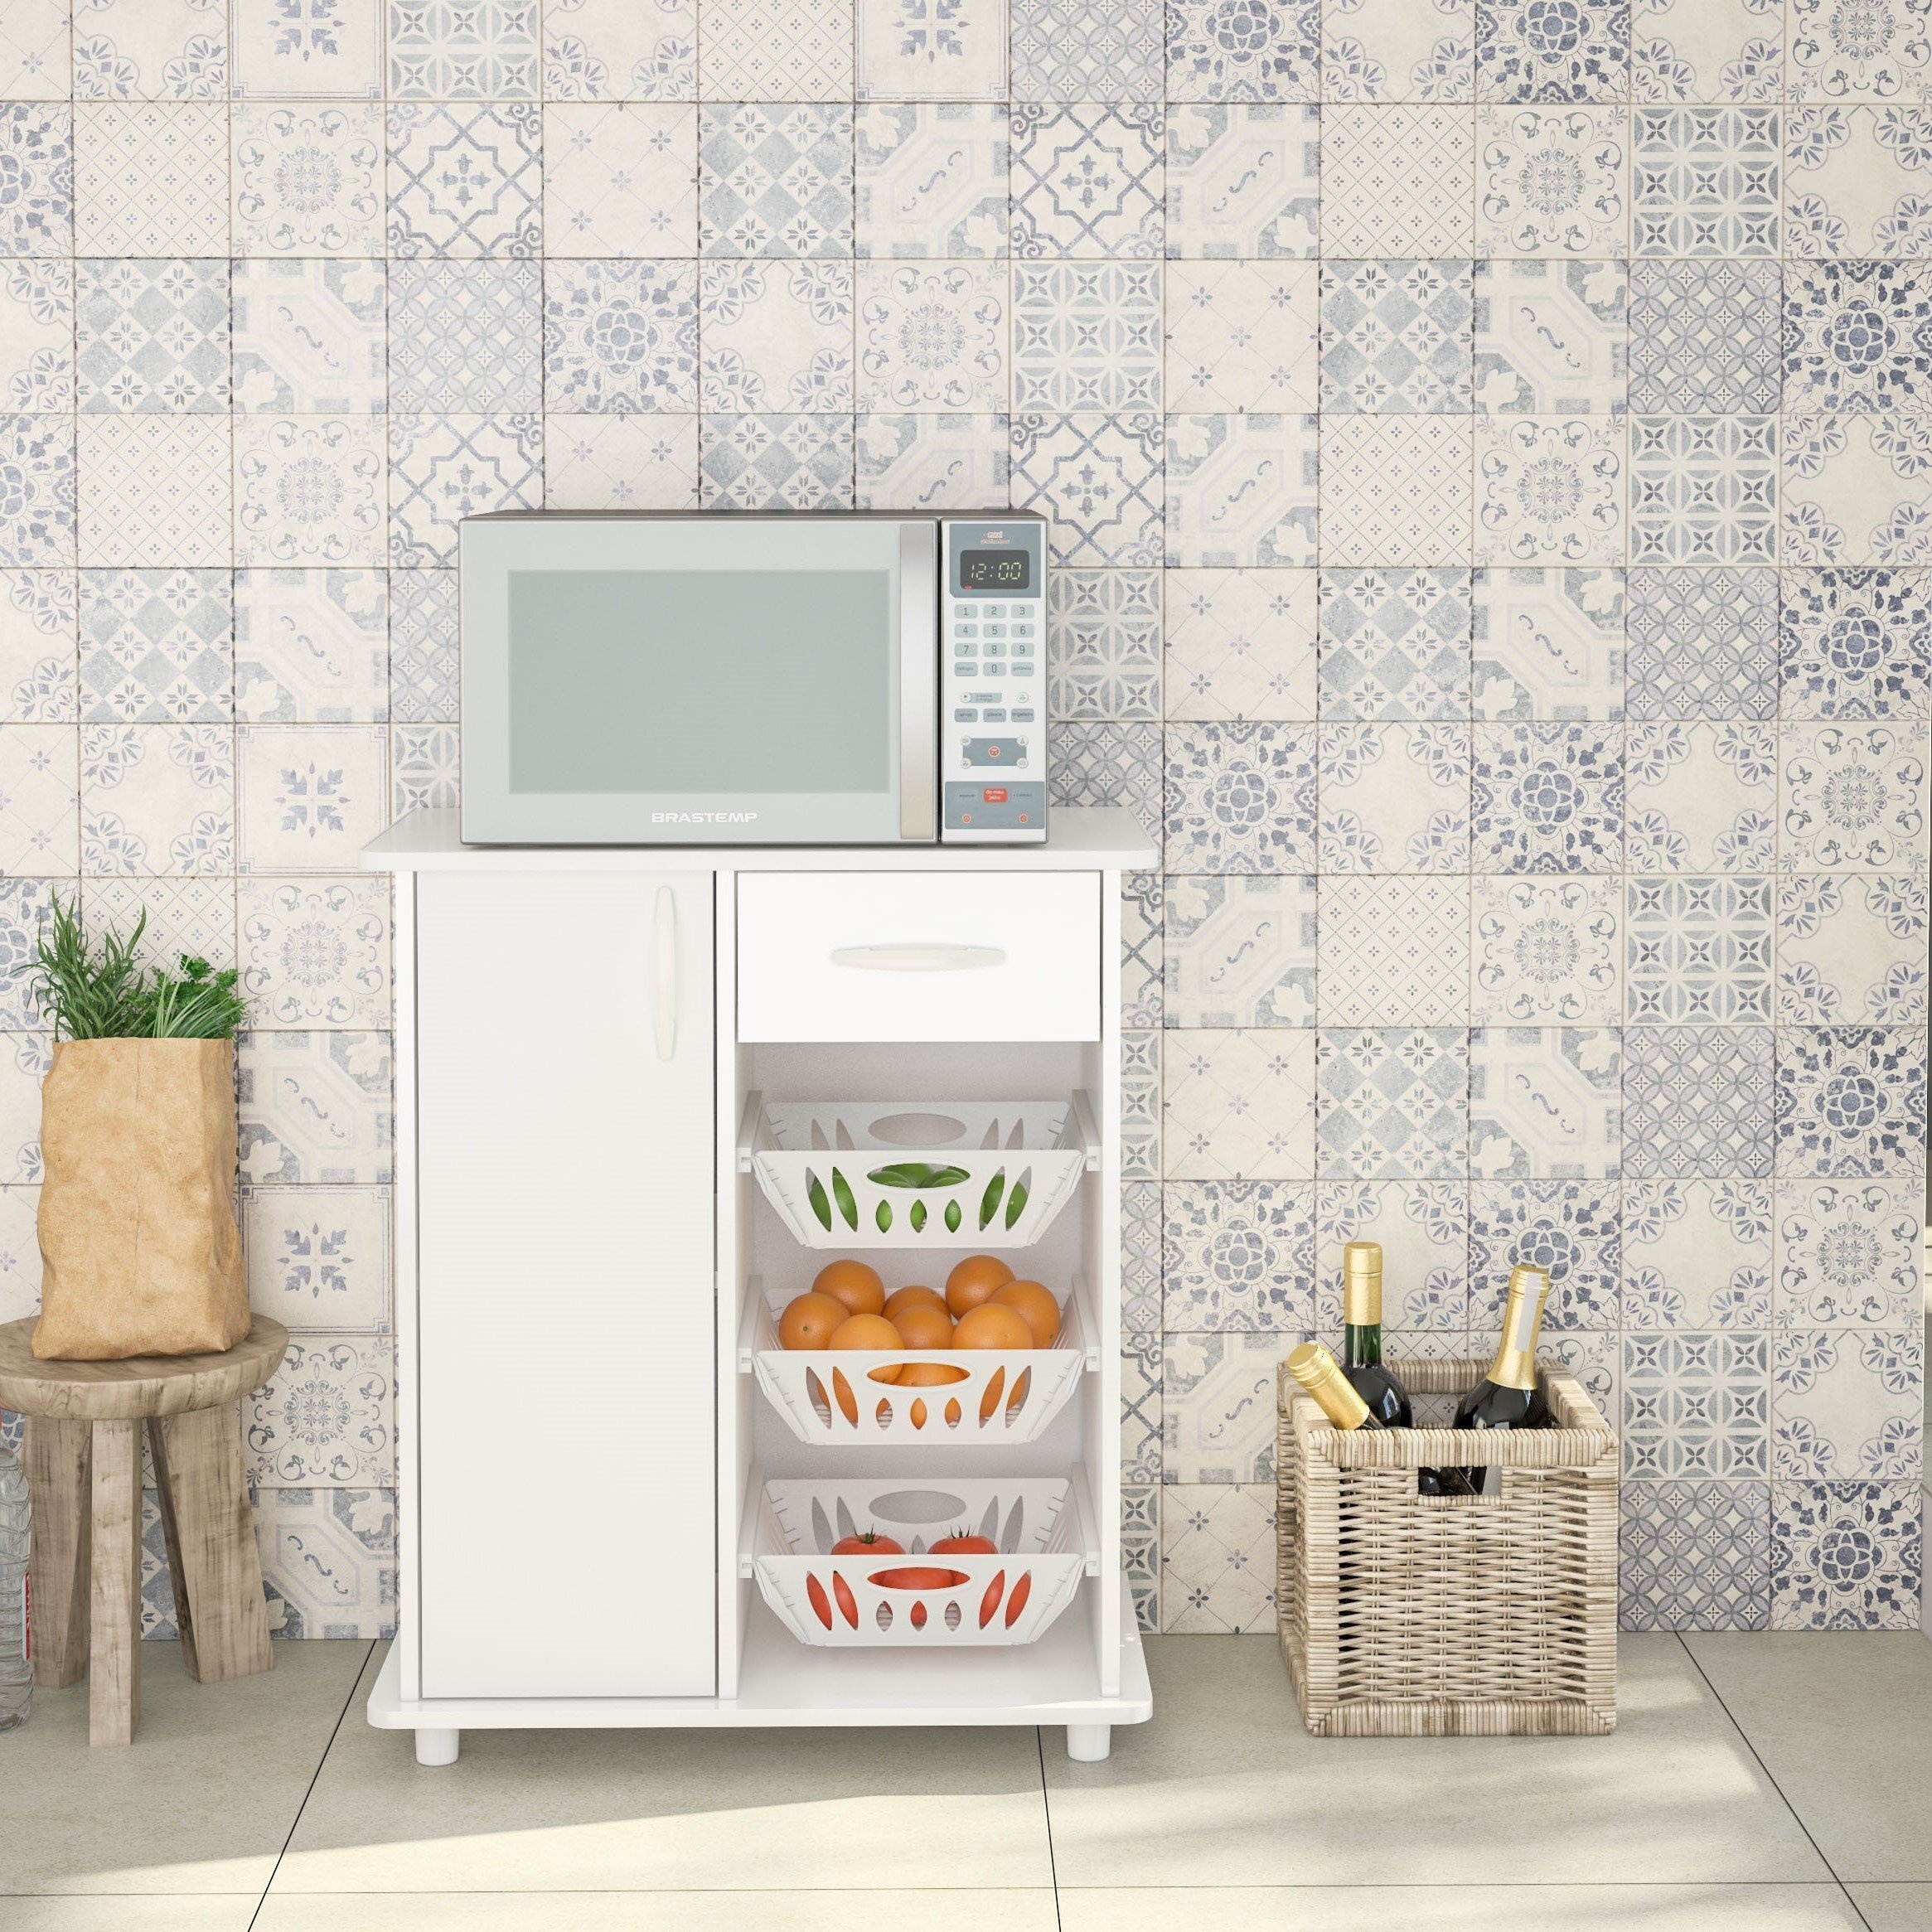 Stand Alone Kitchen Cabinets - VisualHunt